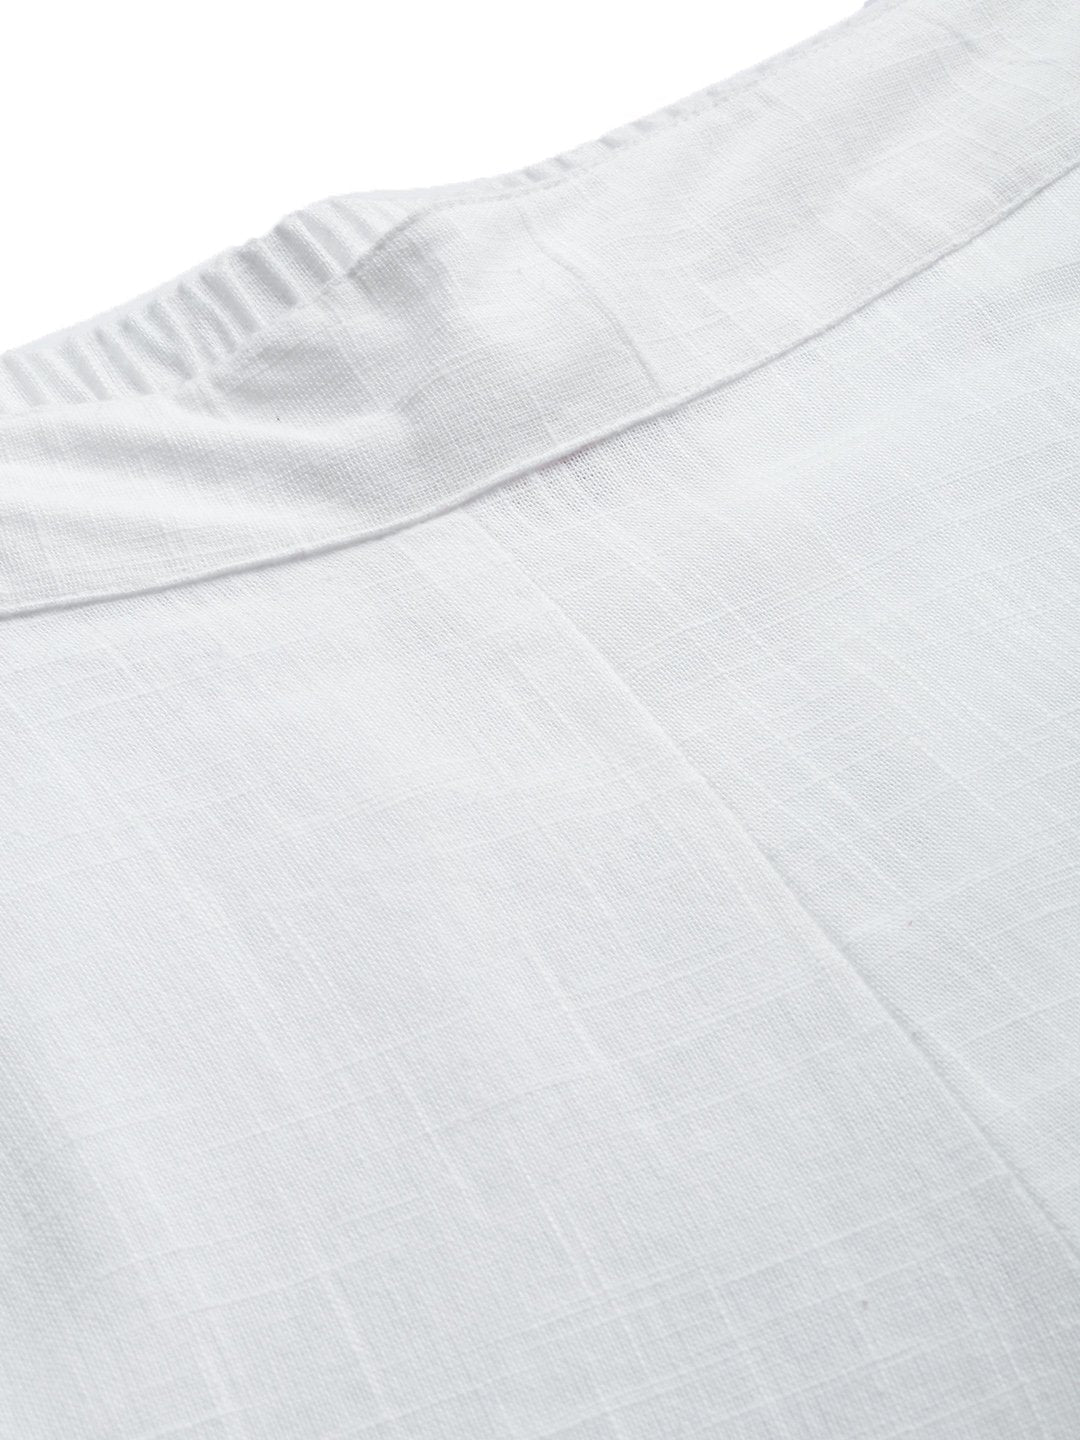 Women's White Cotton Trouser  - Wahenoor